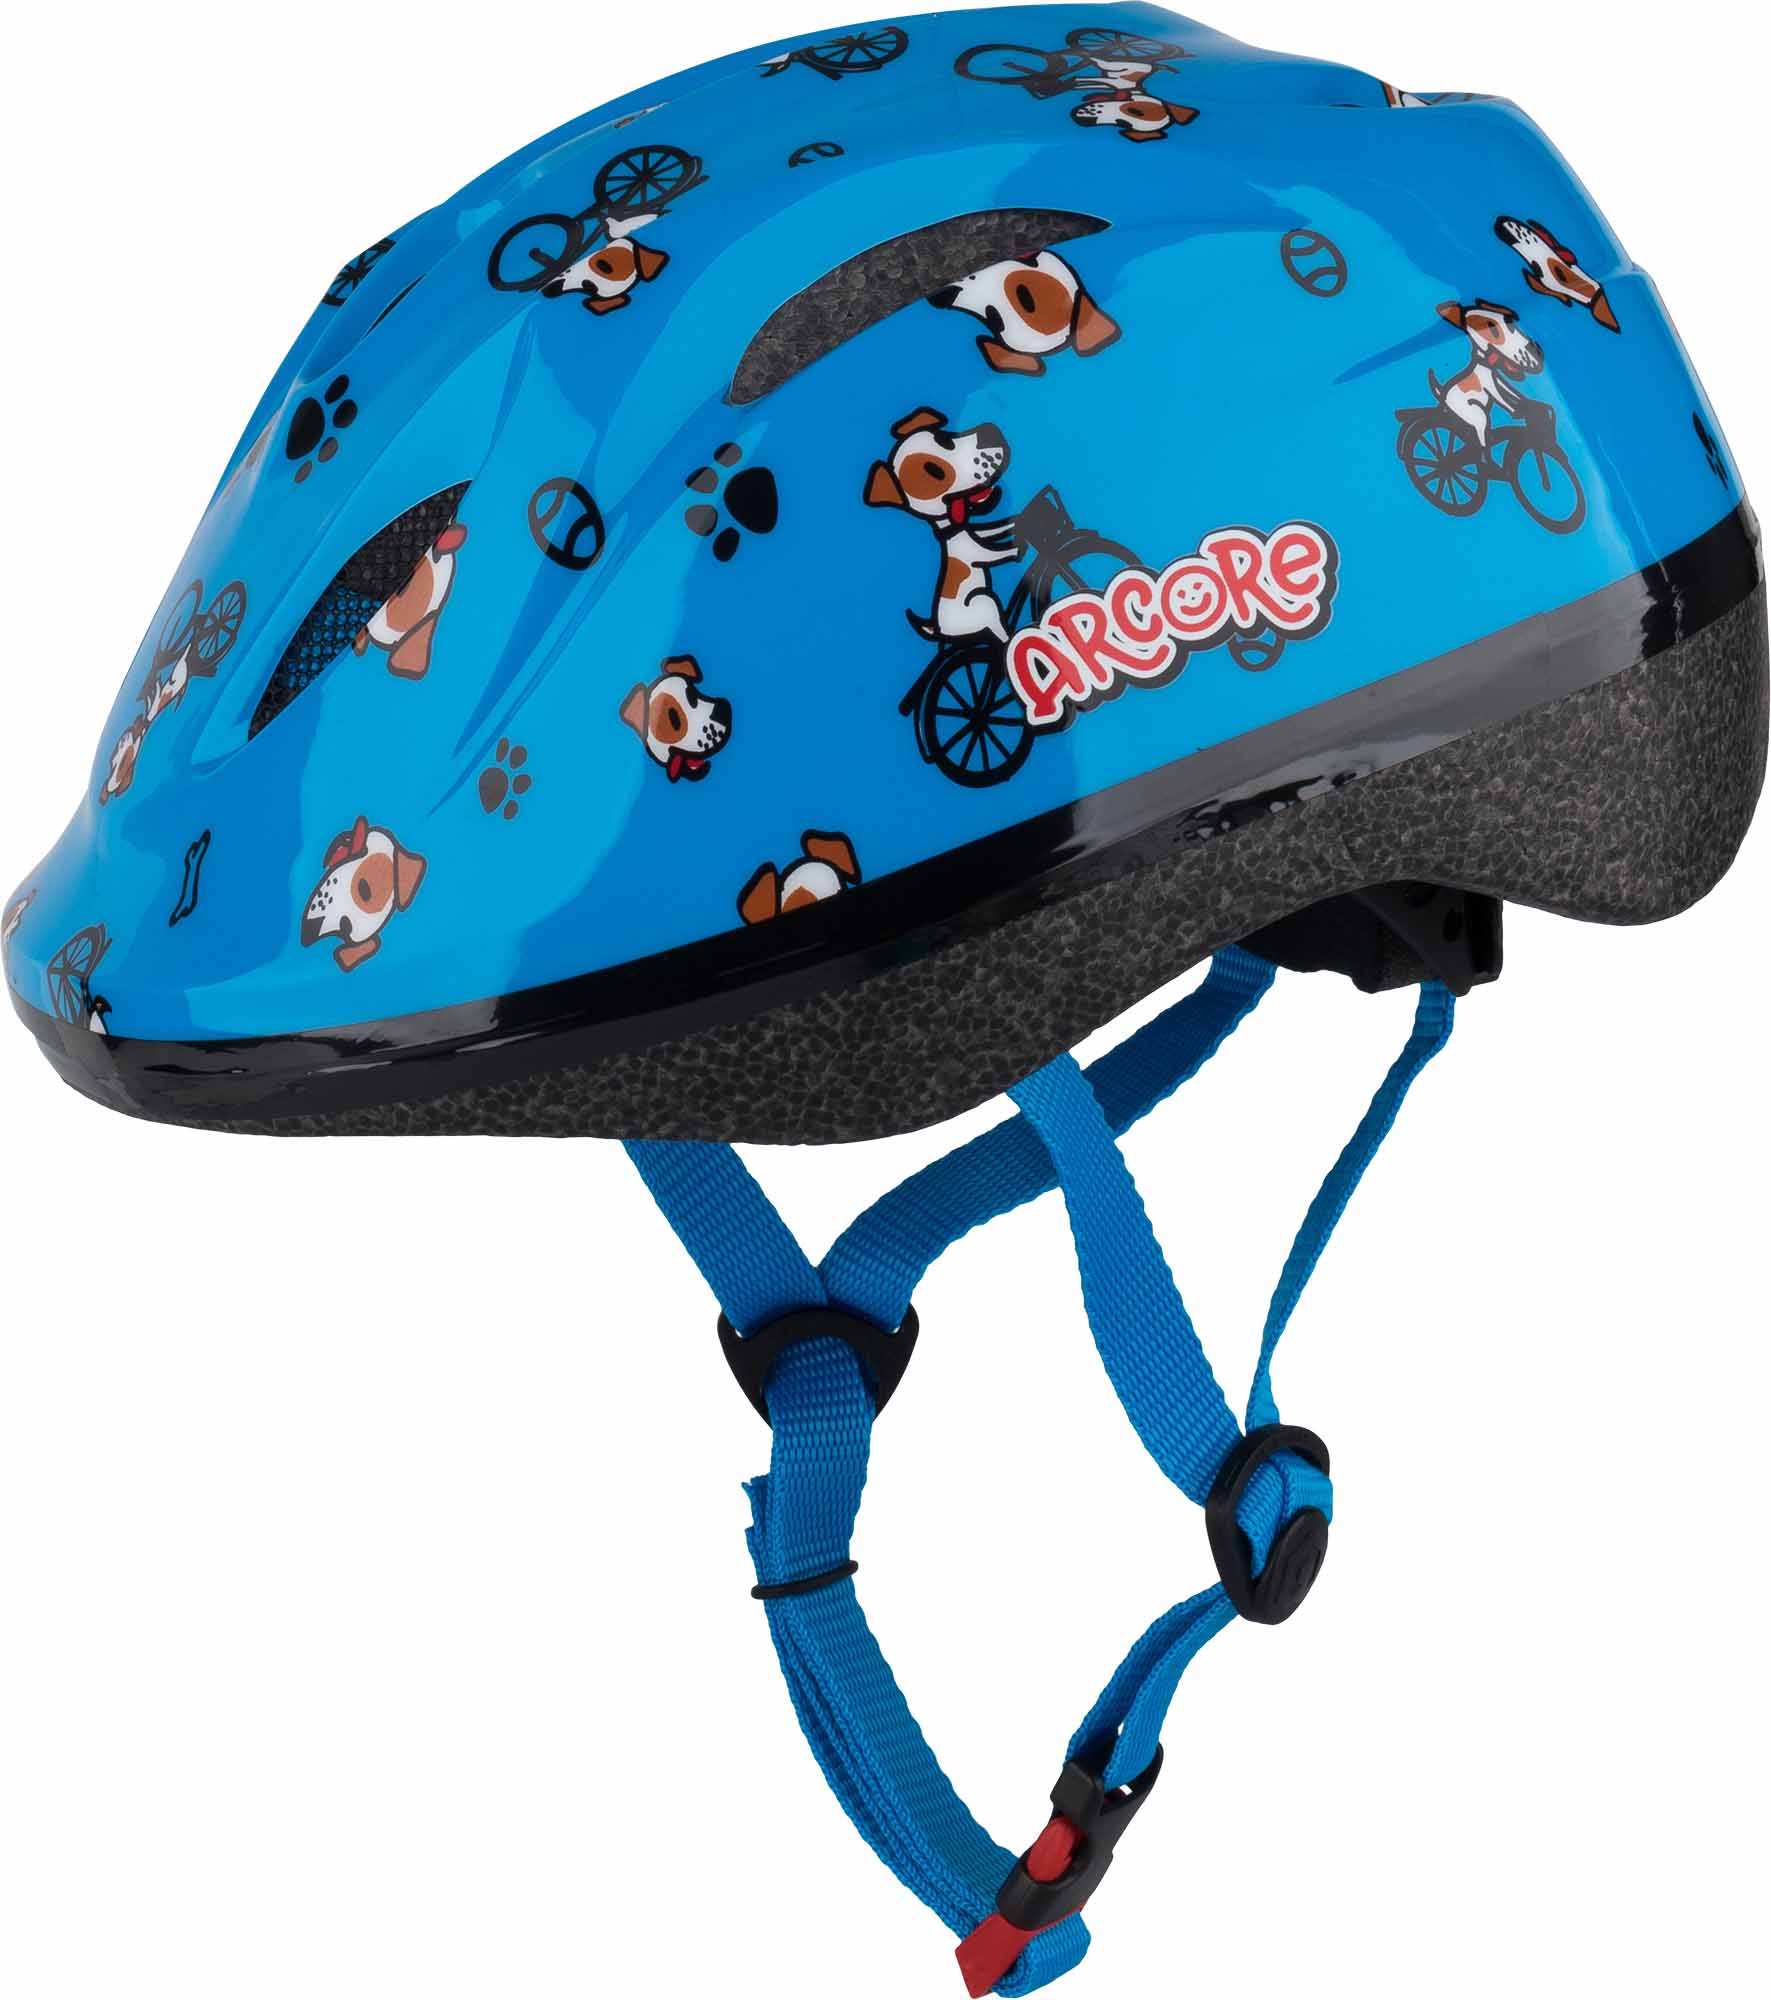 Boys’ cycling helmet